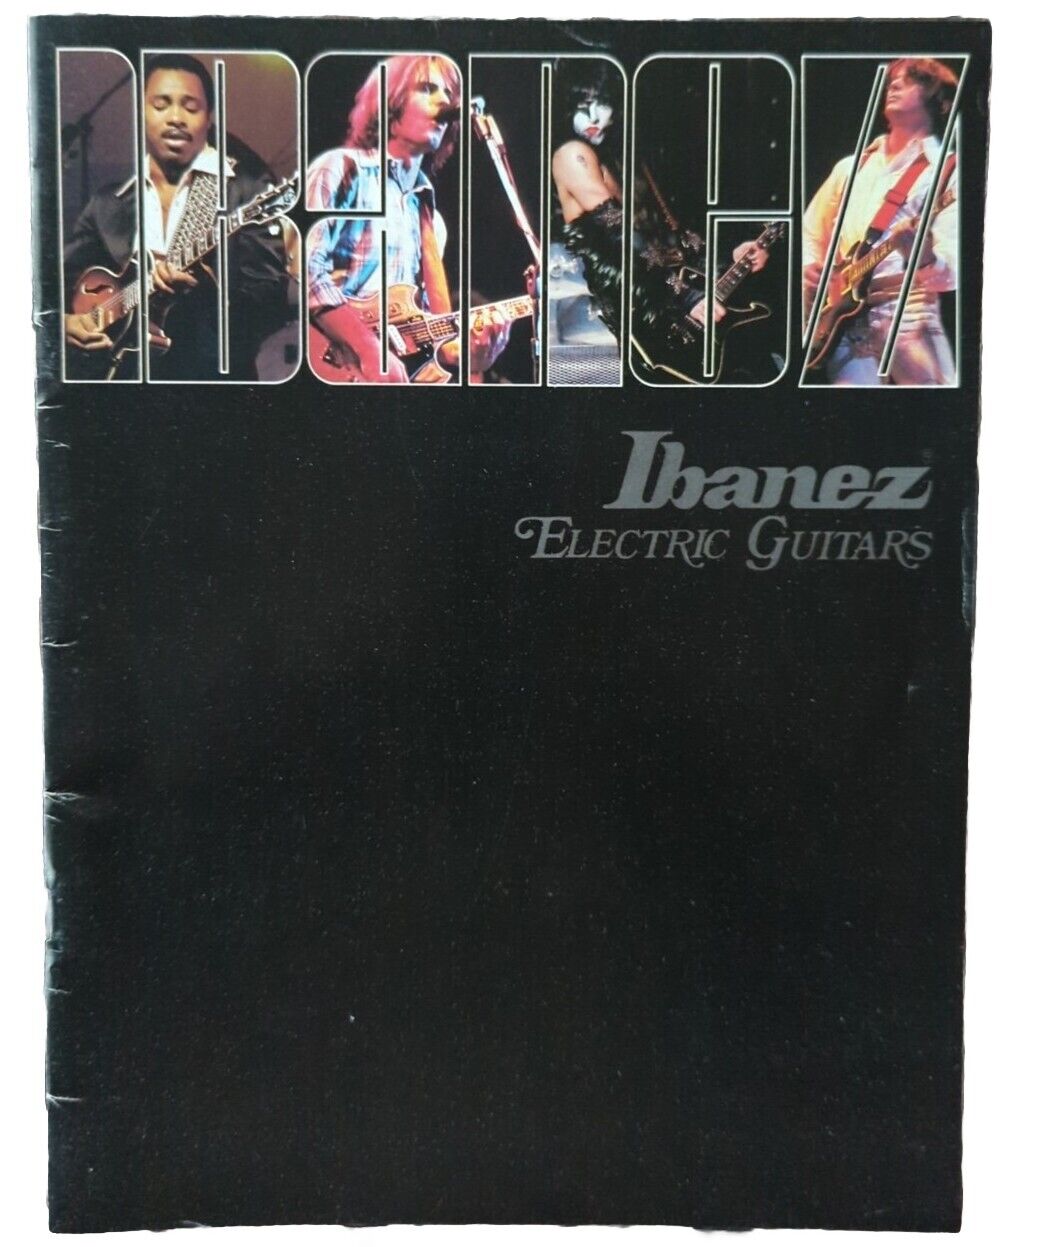 Ibanez Catalog 1978 Electric Guitars Dealers Sales Catalog Printed in Japan 